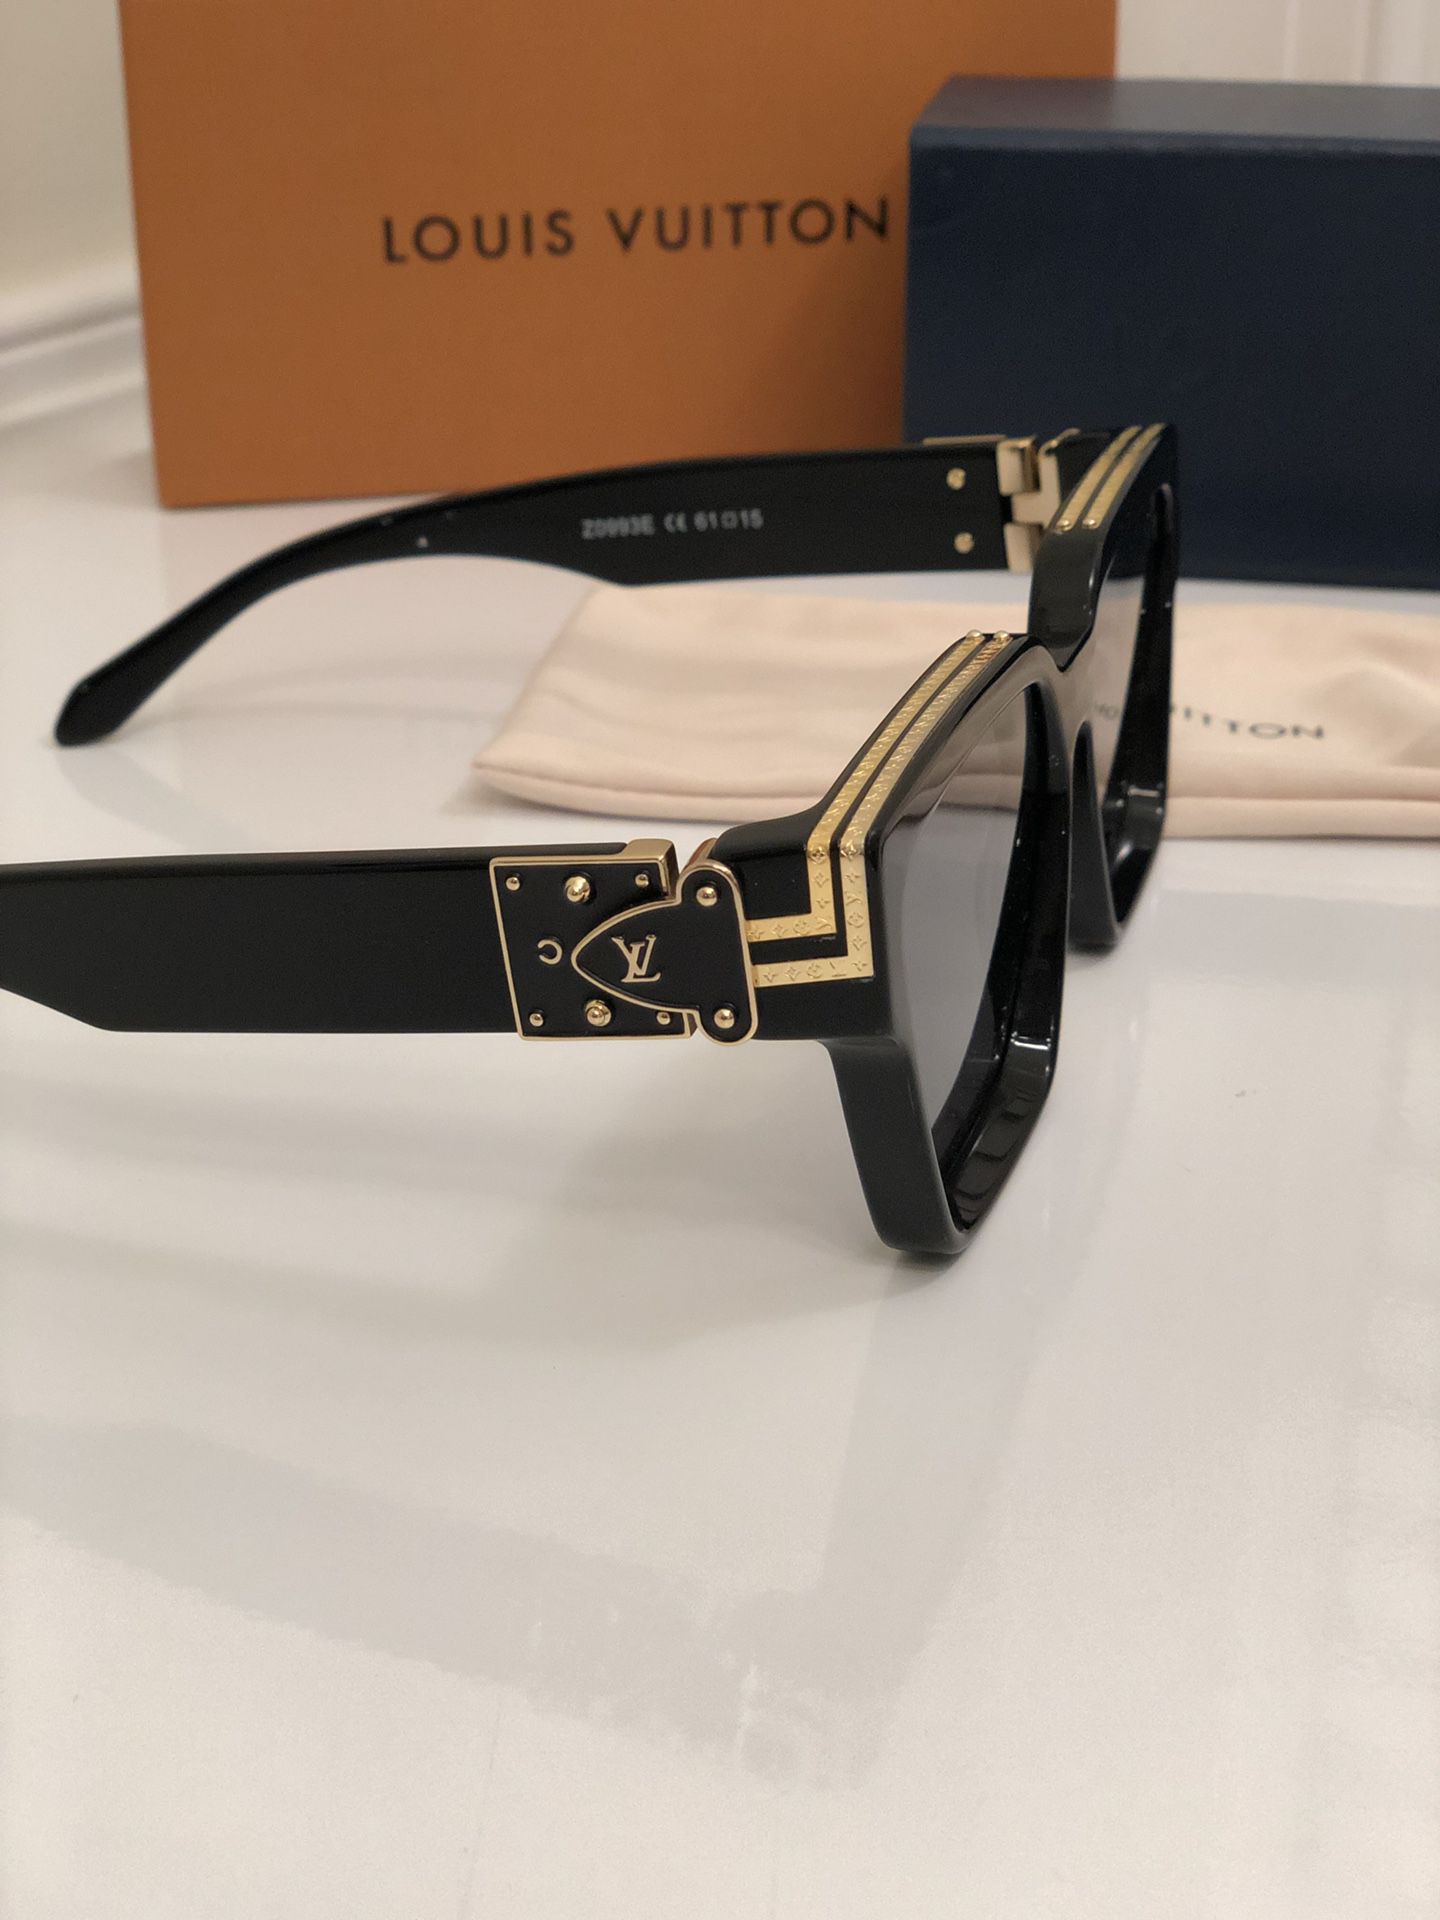 Louis Vuitton Millionaire 1.1 Sunglasses for Sale in Rocky Mount, NC -  OfferUp